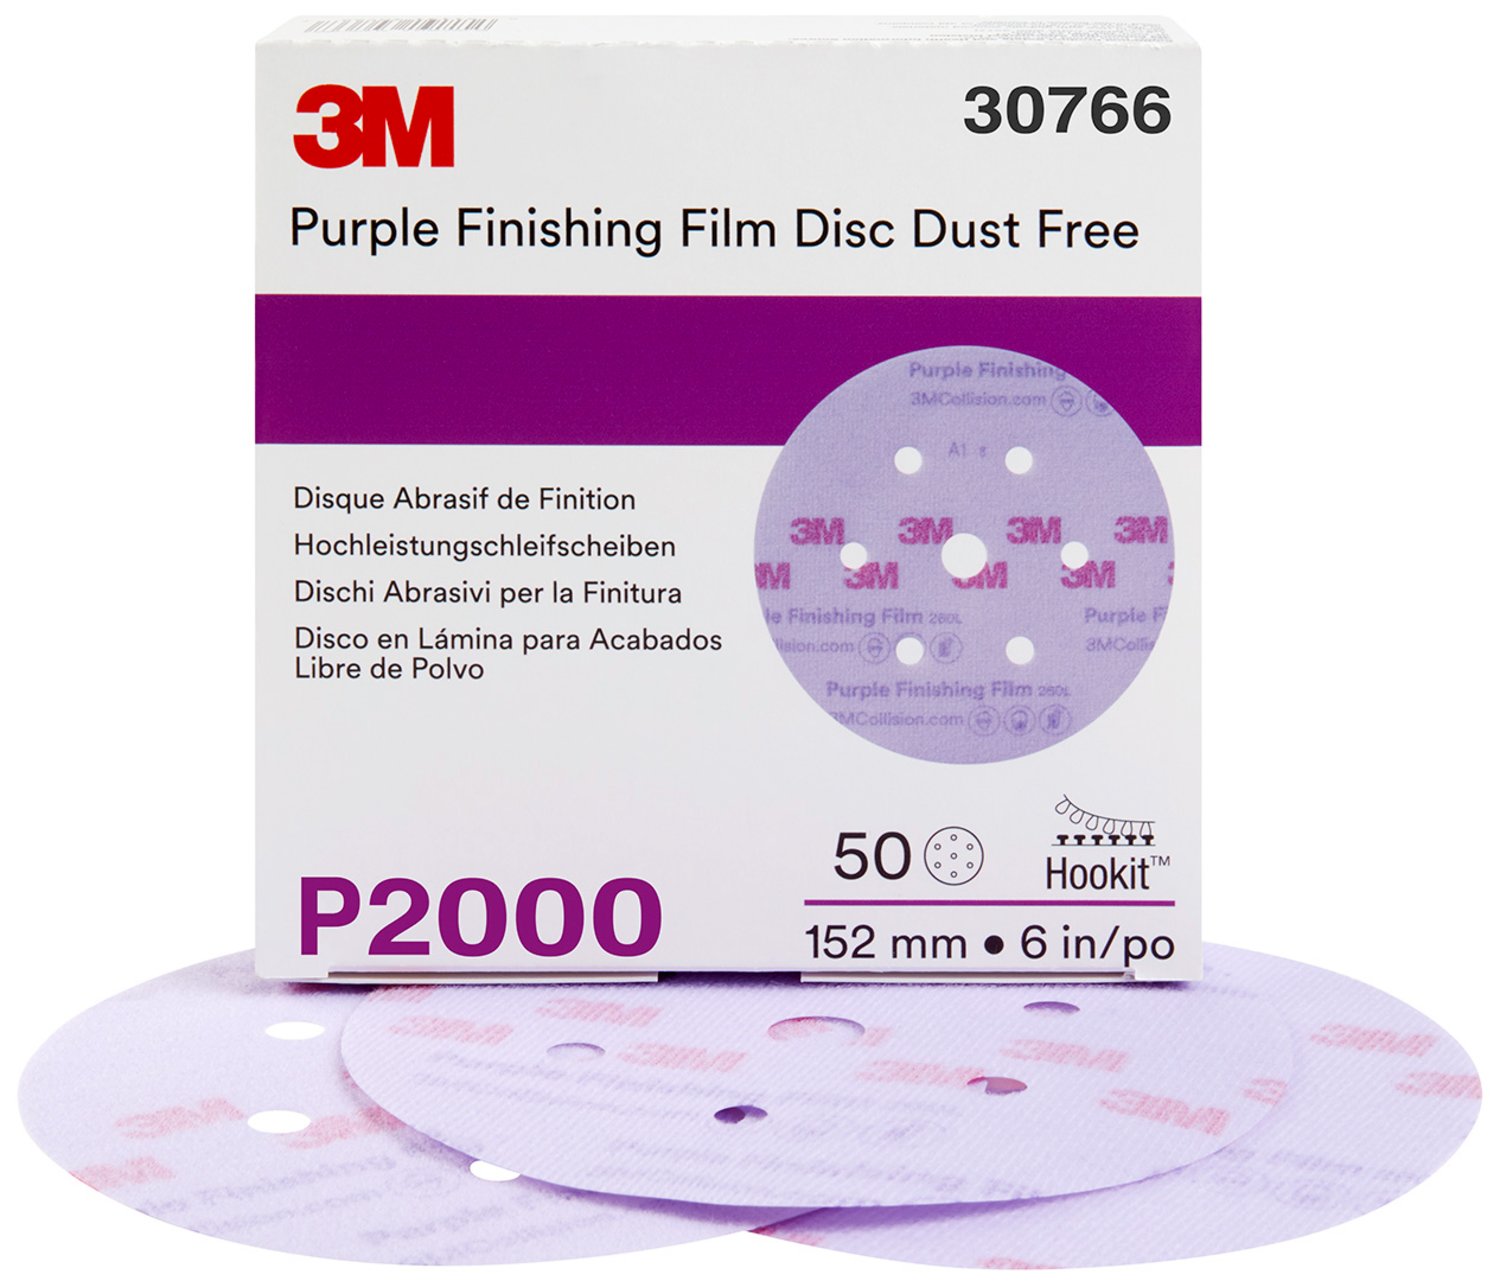 7100122799 - 3M Hookit Purple Finishing Film Abrasive Disc 260L, 30766, 6 in, Dust
Free, P2000, 50 discs per carton, 4 cartons per case